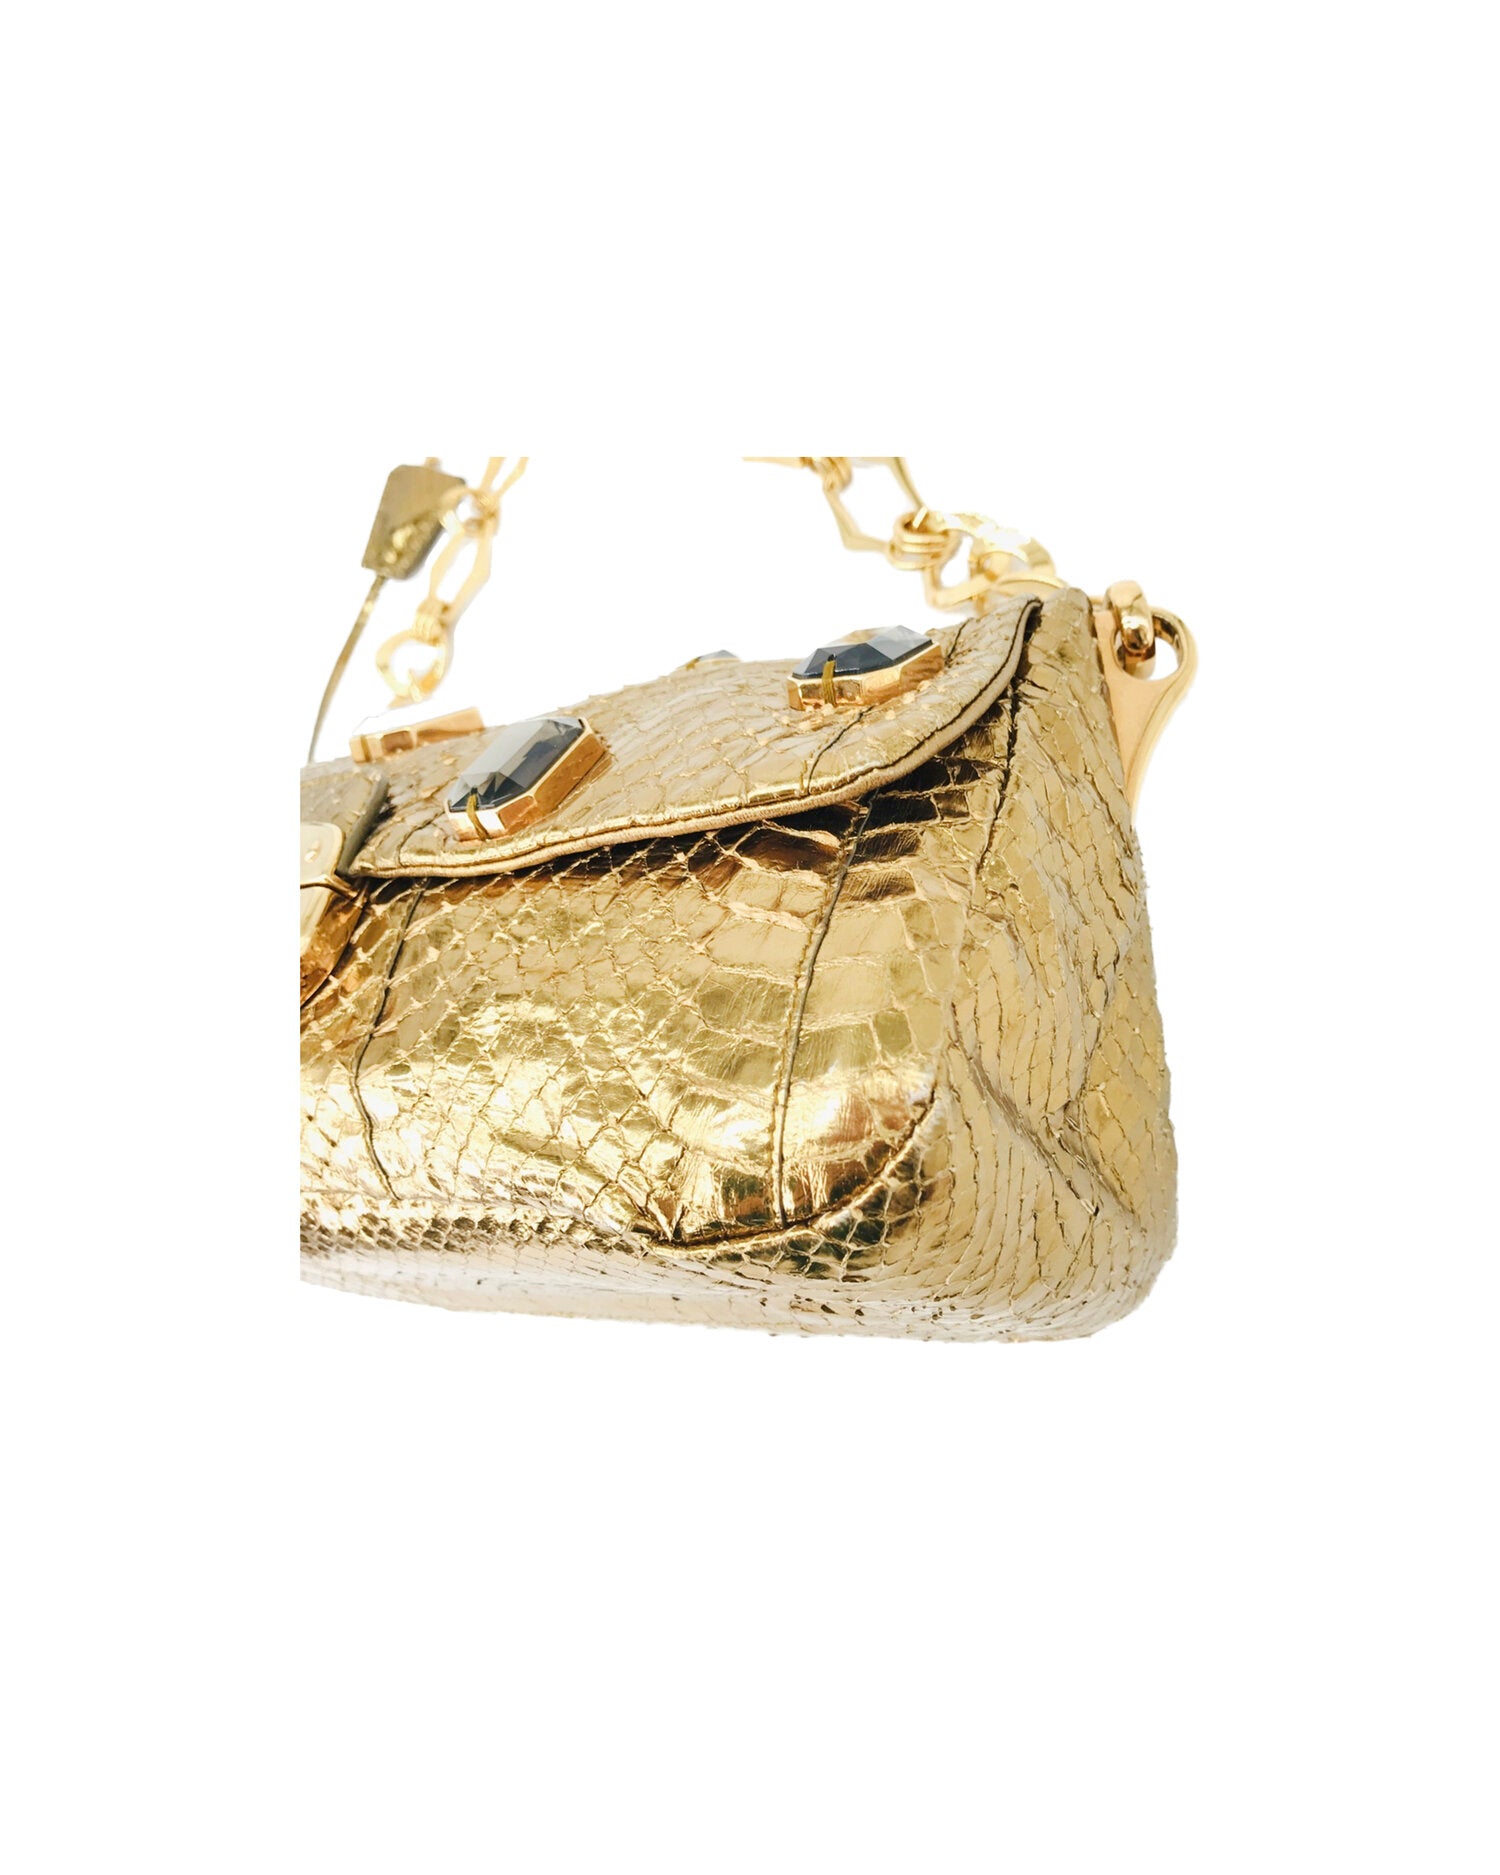 Prada 2000s Gold Rare Bijoux Chain Handbag